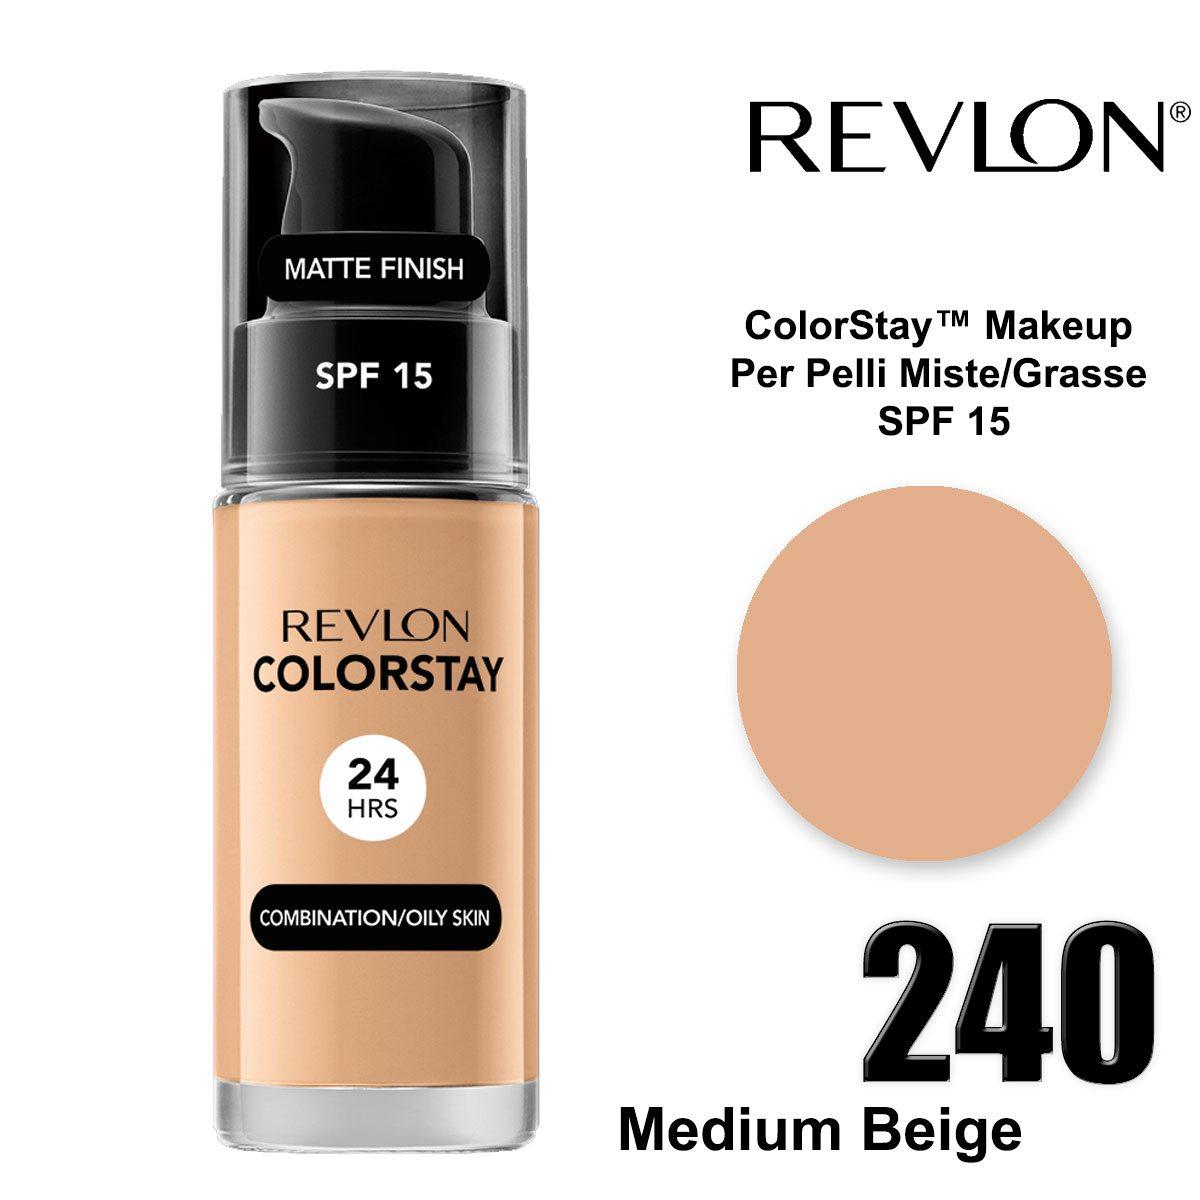 Revlon colorstay makeup oily skin medium beige 240